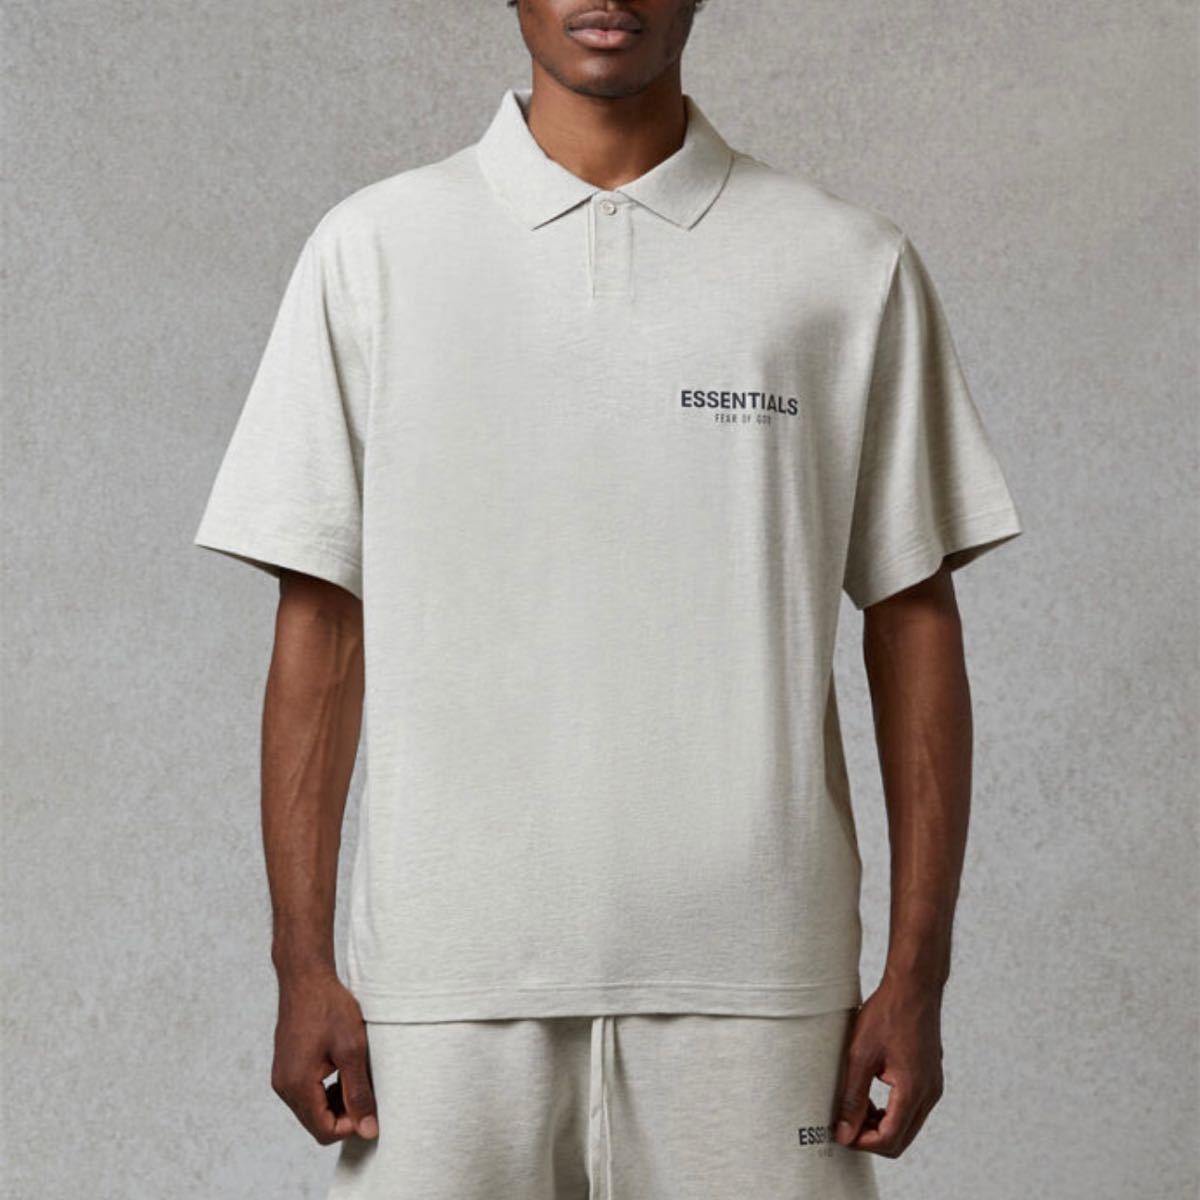 L50%OFF【L】オートミール FOG Essentials Polo Shirt ポロシャツ  メンズL￥9,000-epmhv.quito.gob.ec